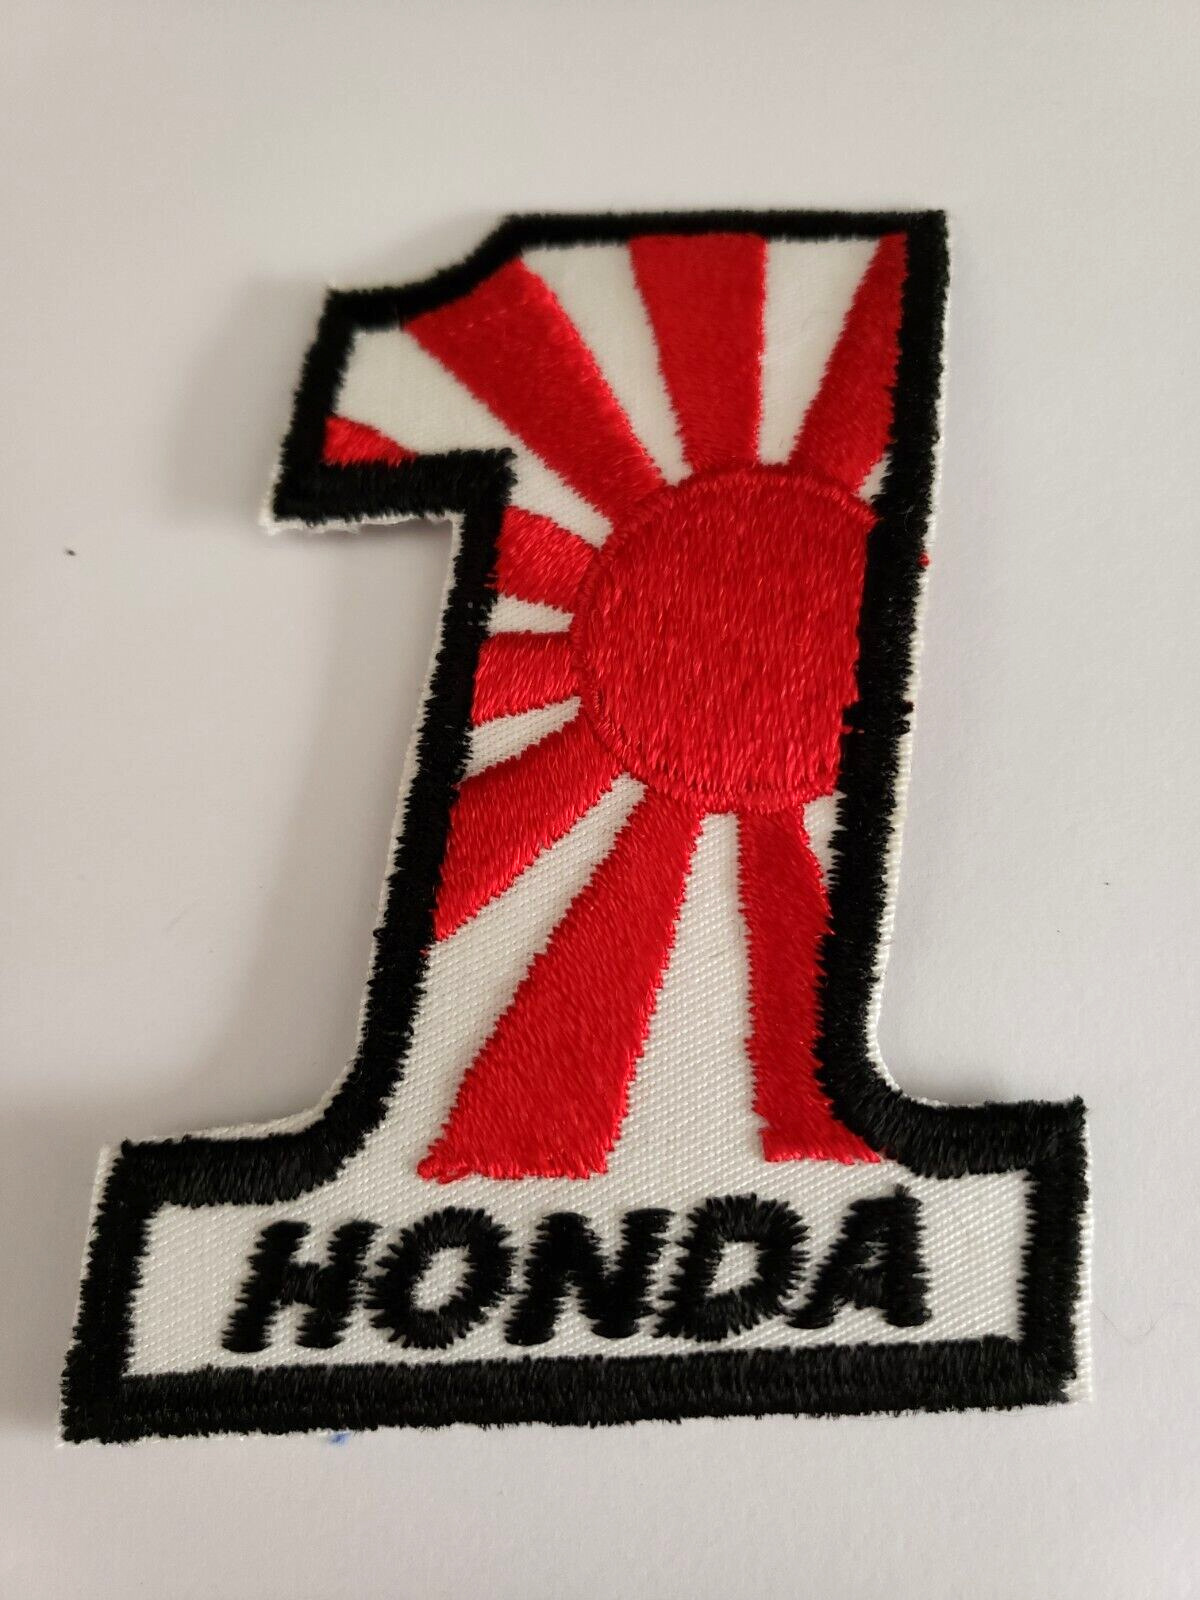 Vintage Honda Motorcycle Patch